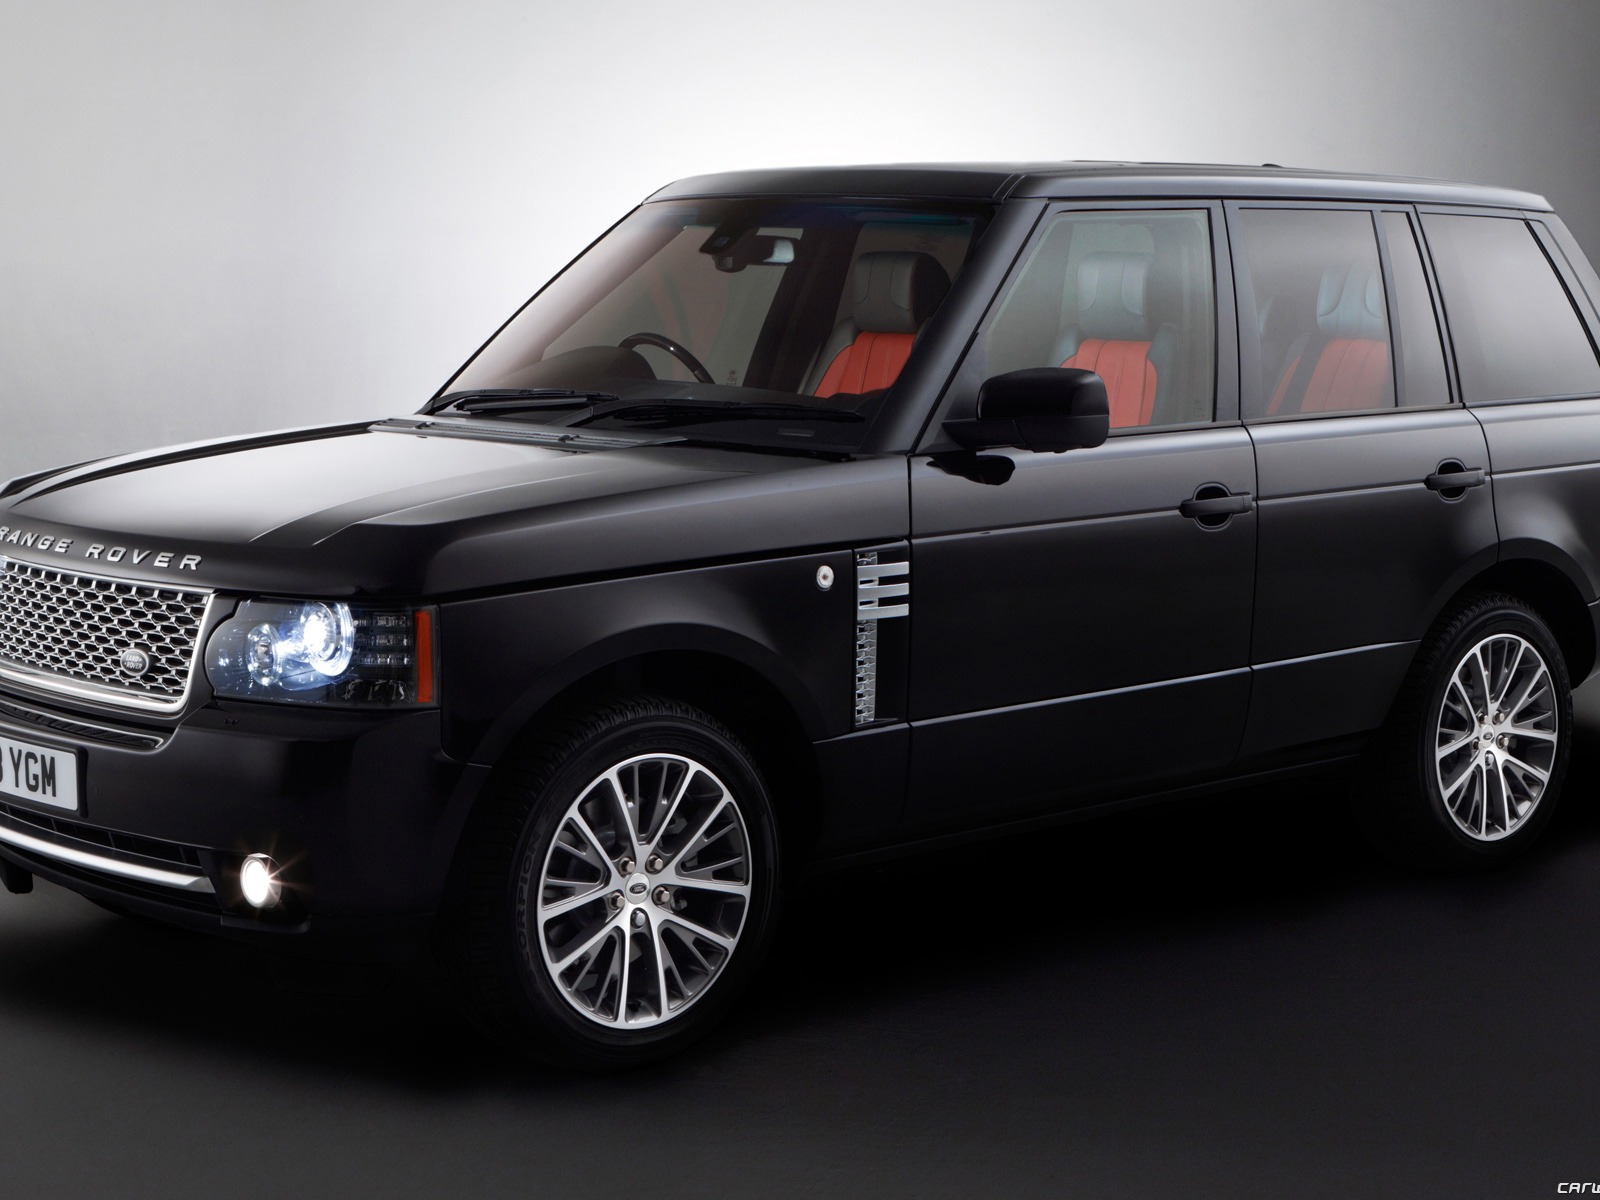 Land Rover Range Rover Black Edition - 2011 路虎18 - 1600x1200